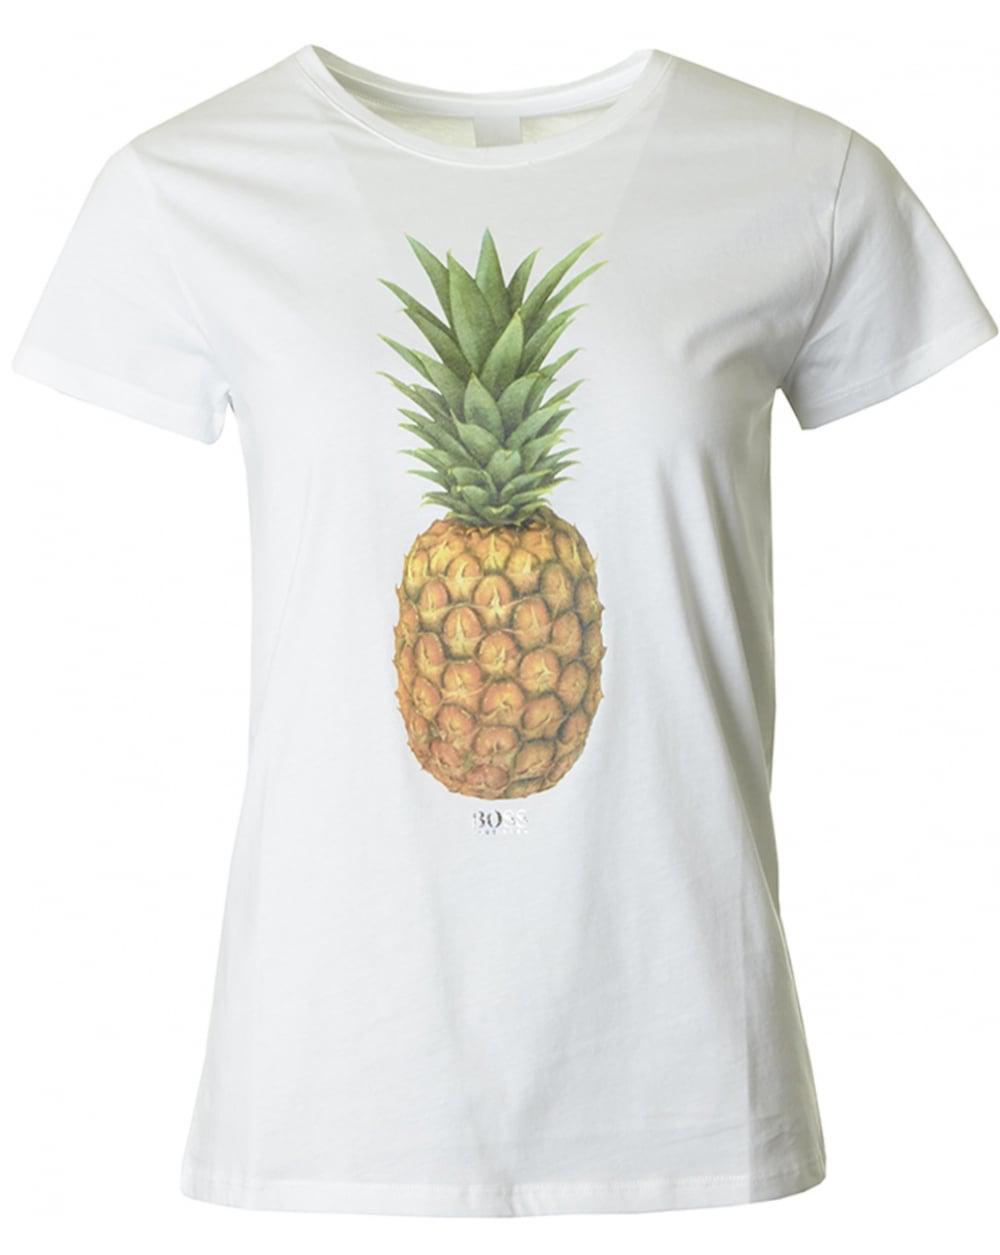 hugo boss pineapple shirt